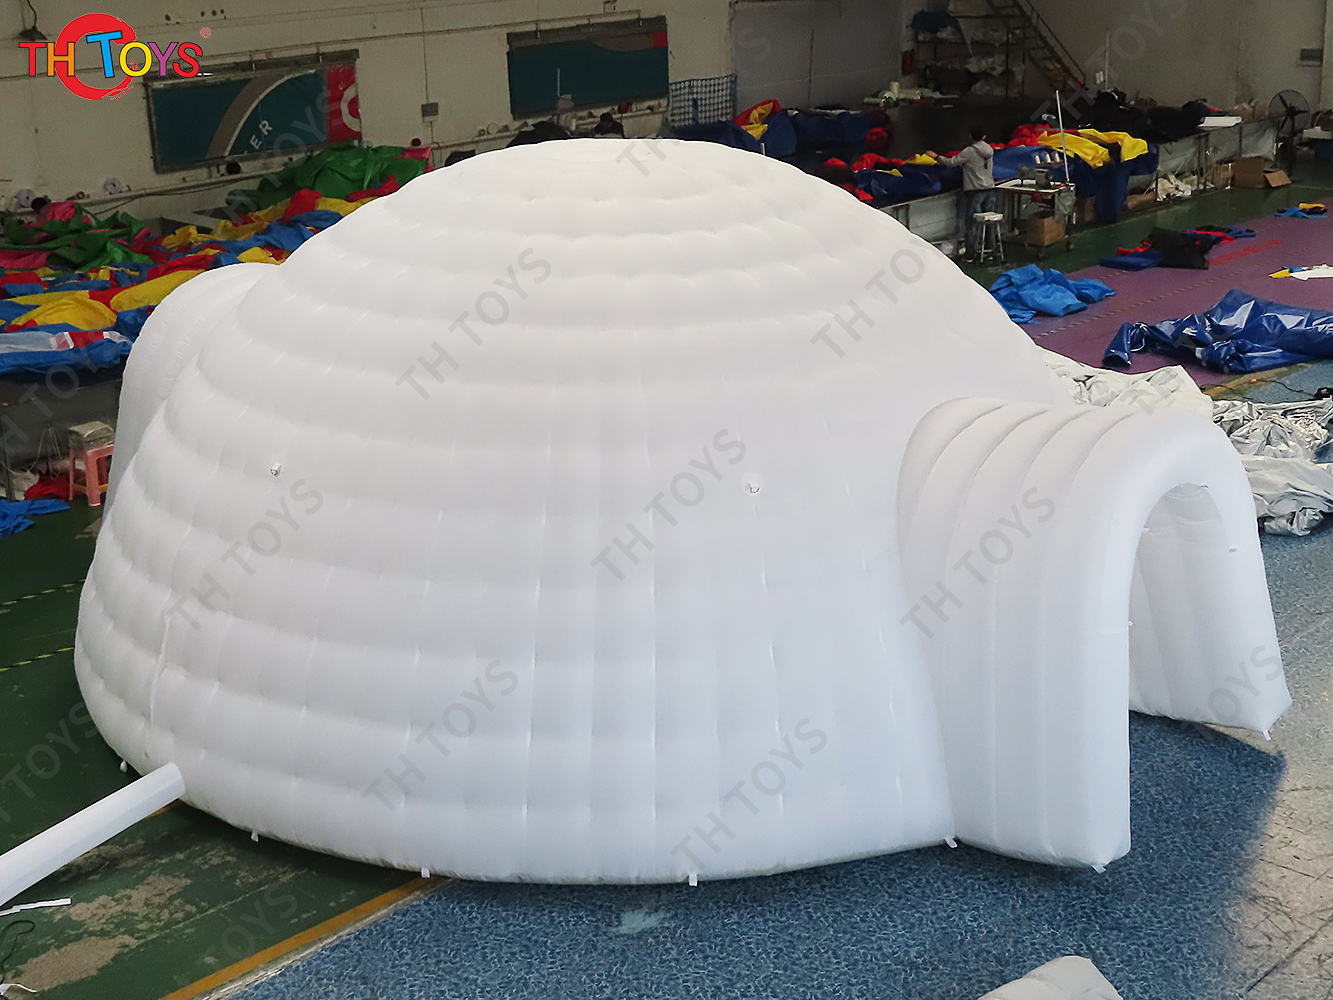 2 doorsled lighting 10m inflatable igloo dome tent new design inflatable bubble tent with led light